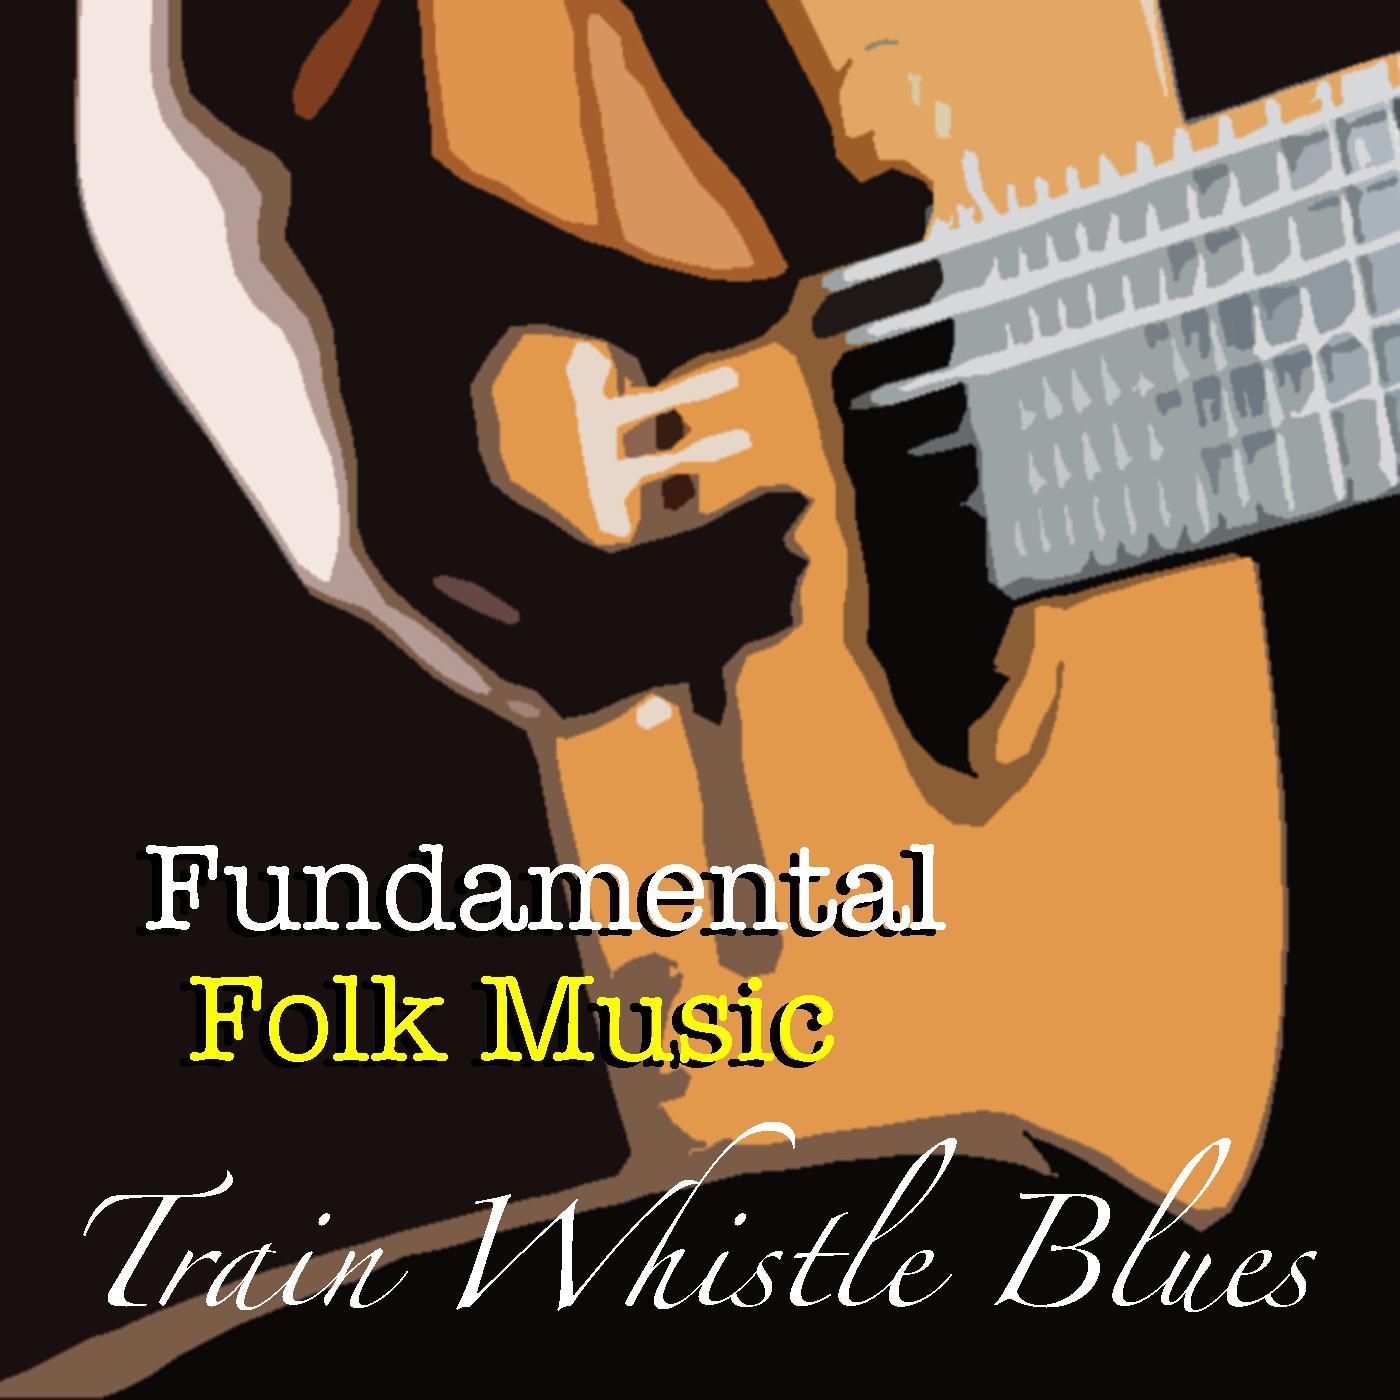 Train Whistle Blues Fundamental Folk Music